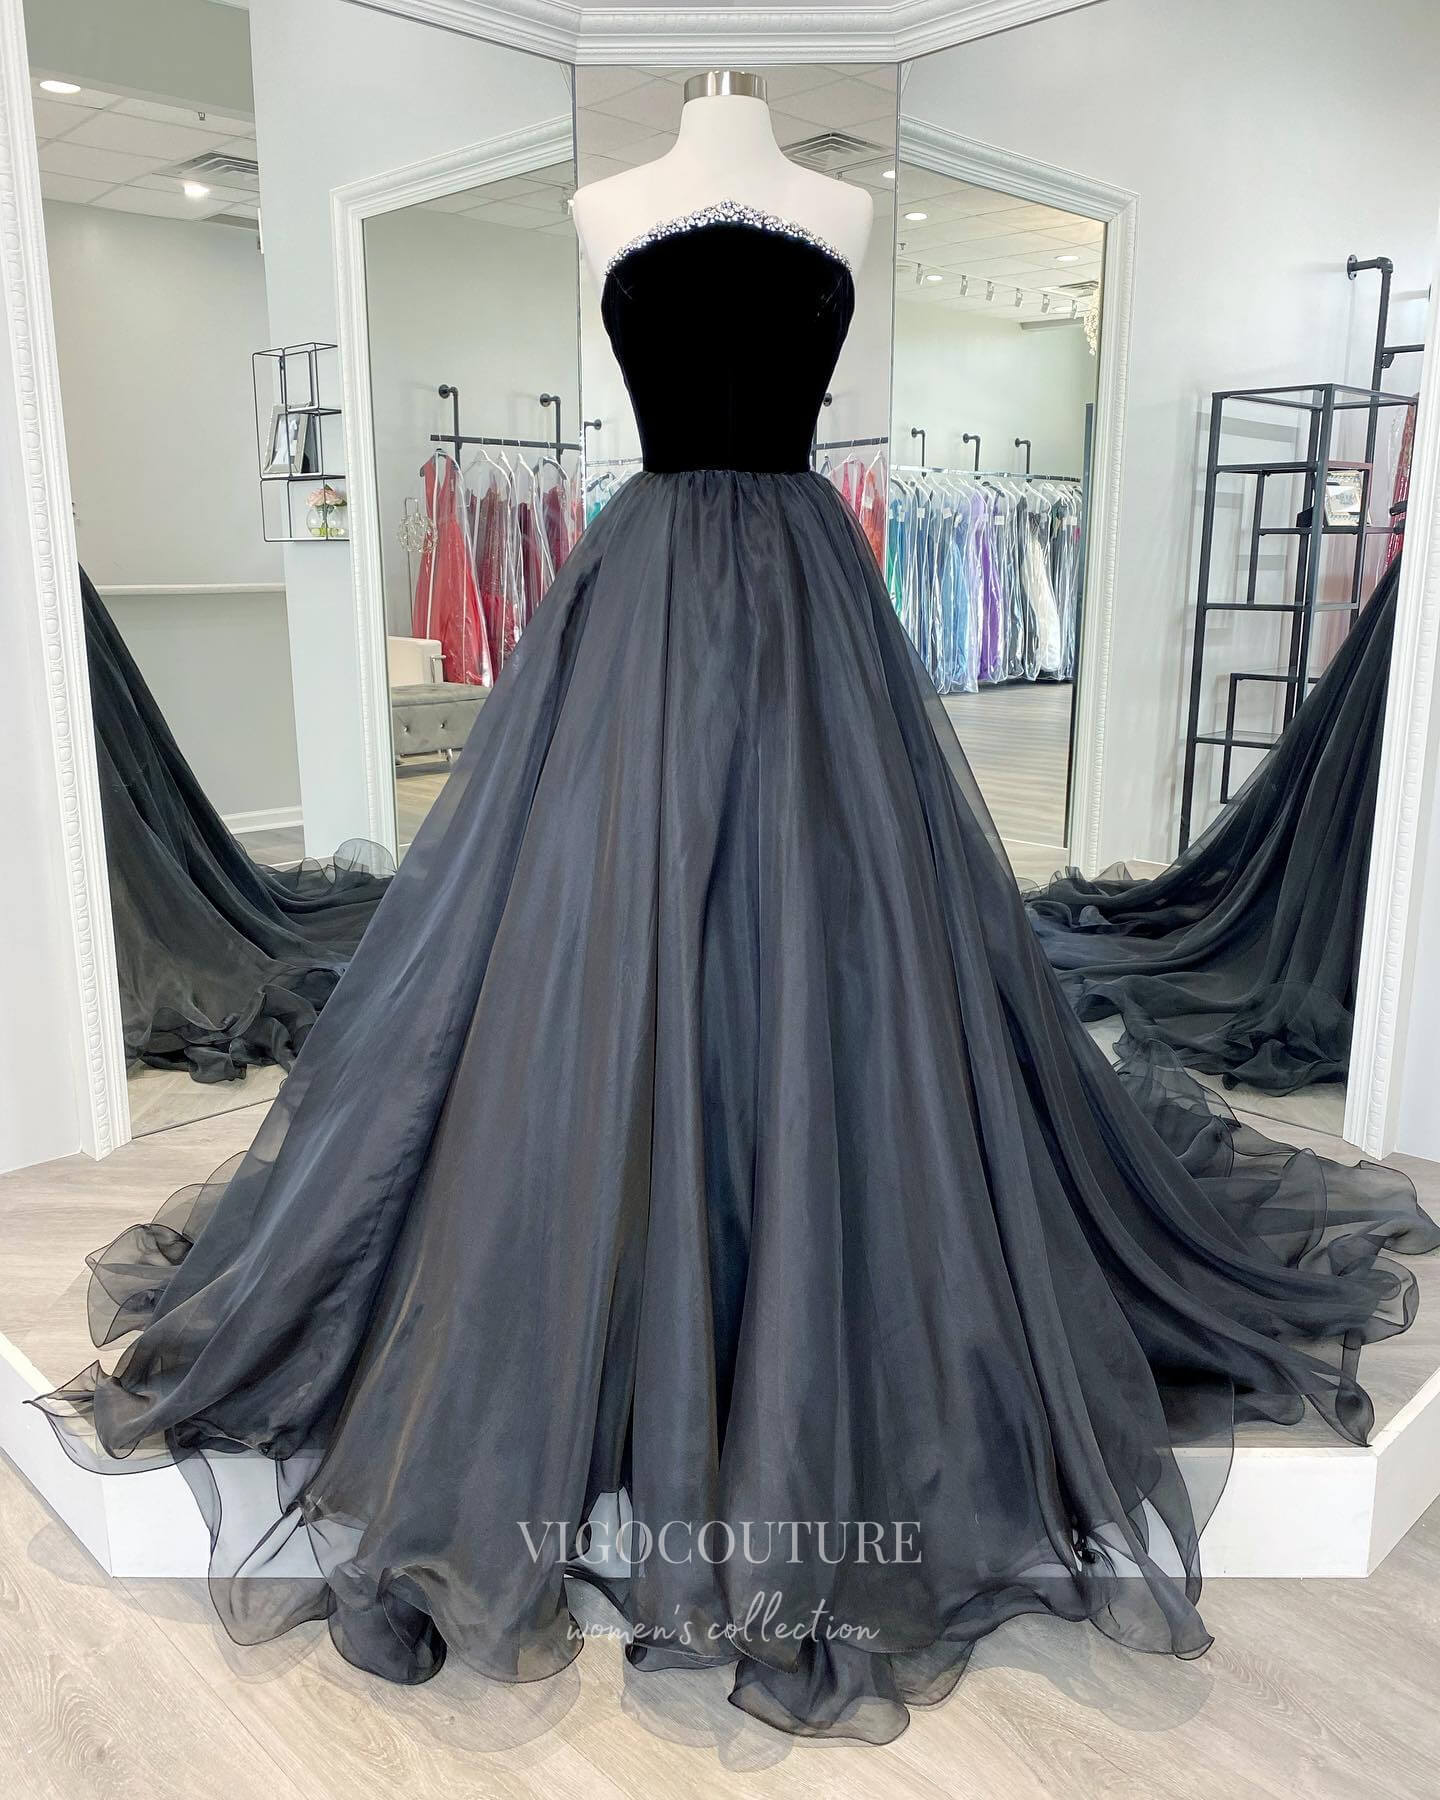 vigocouture-Black Strapless Prom Dresses Organza A-Line Evening Dress 21804-Prom Dresses-vigocouture-Black-US2-